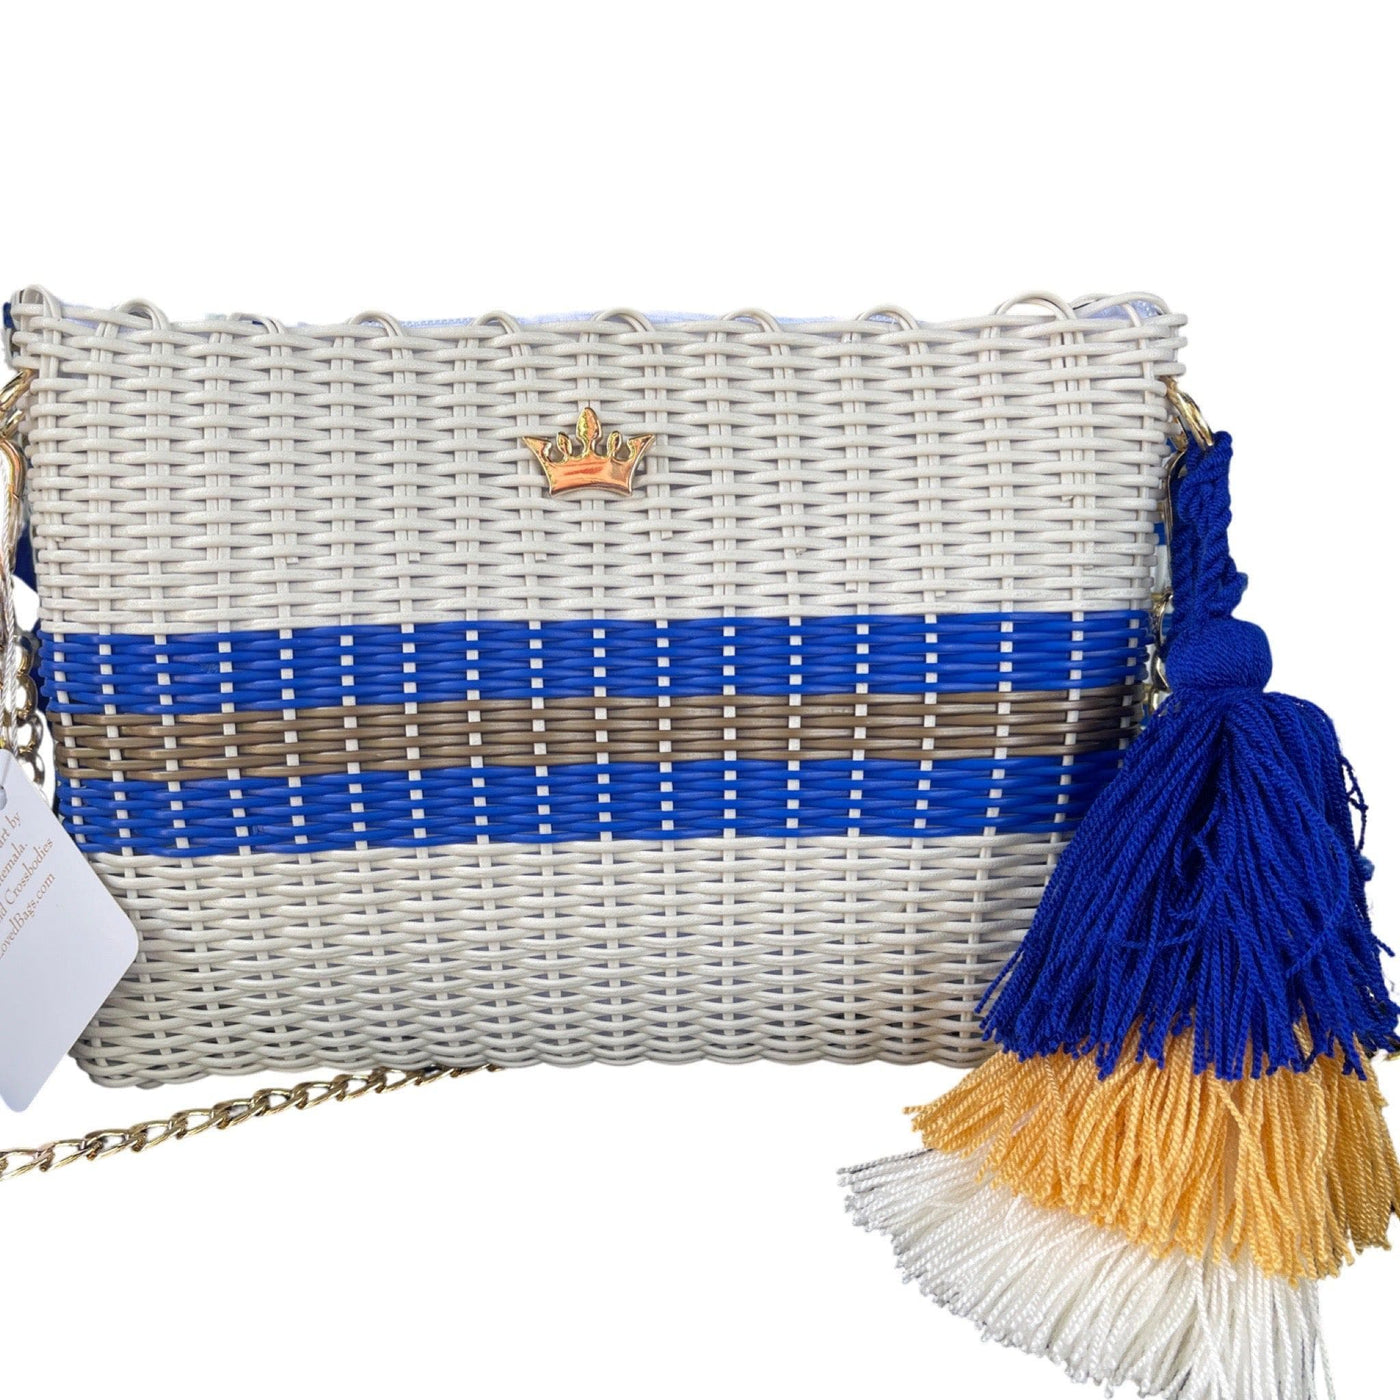 BeeLoved Custom Artisan Bags and Gifts Handbags Medium / Gold TFA Royals Team Spirit Crossbody/Clutch Bag